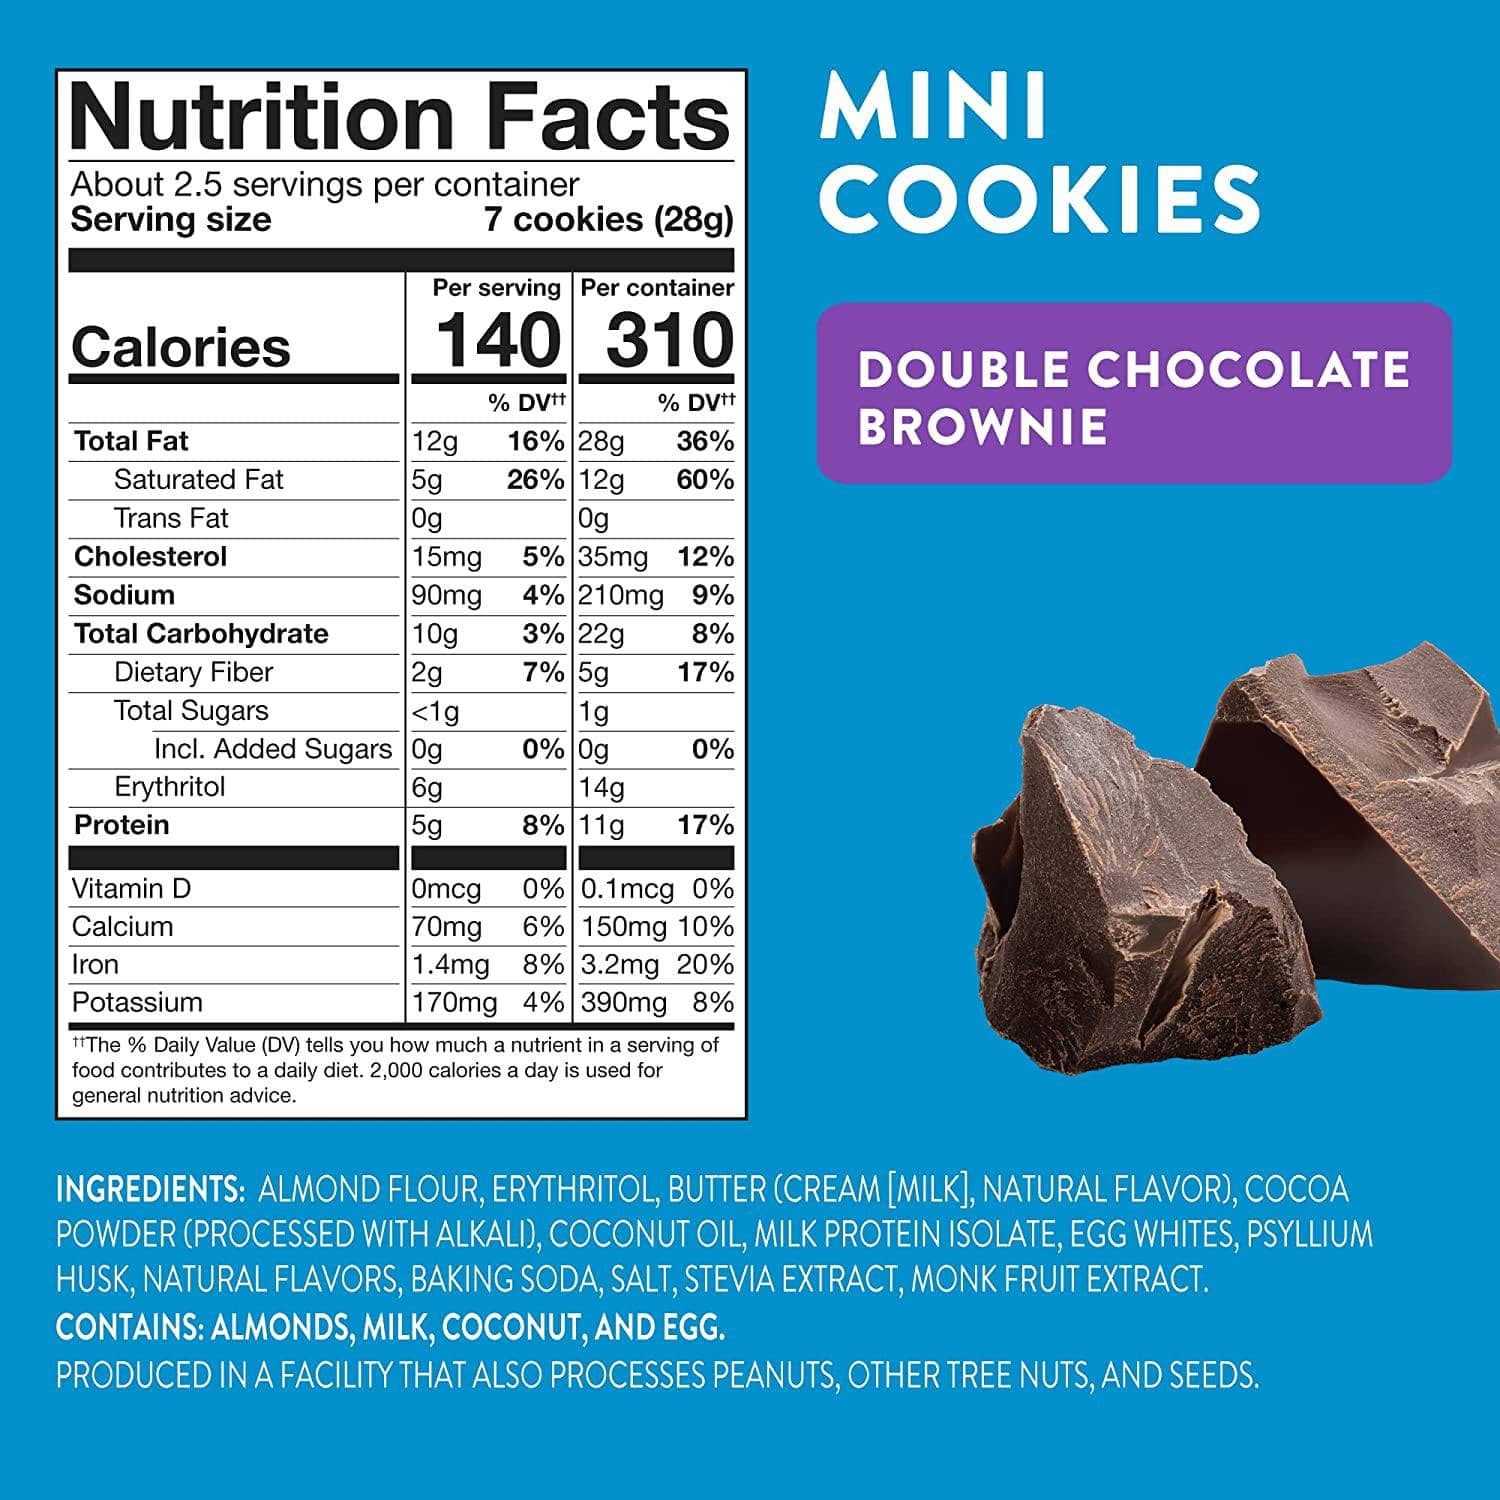 Mini Cookies: Double Chocolate Brownie